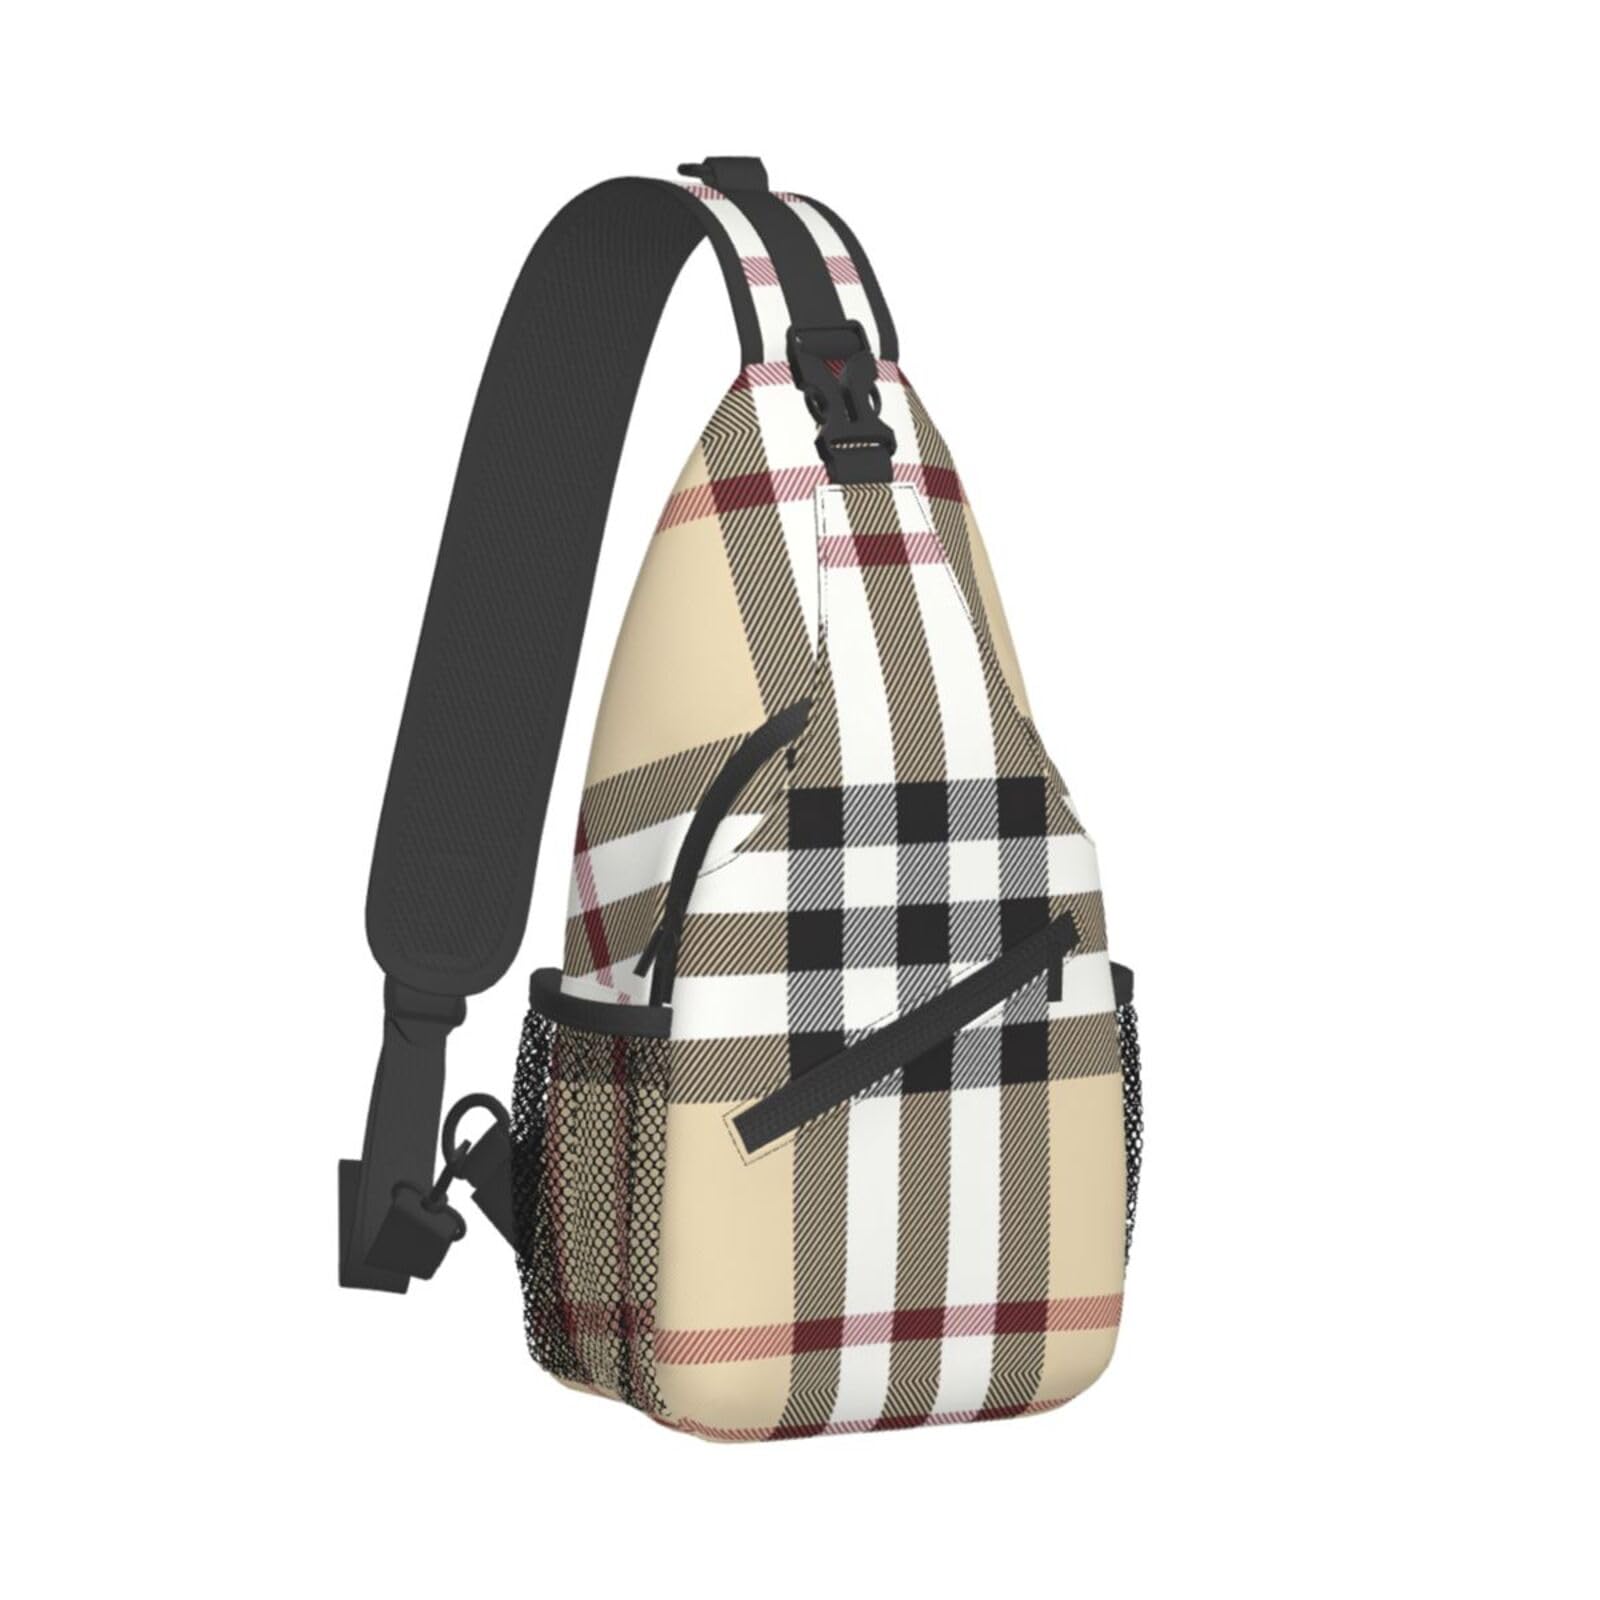 WURTON Sling Bag Glittery Pretty Pattern Print Sling Backpack Crossbody Chest Bag Daypack For Hiking Travel